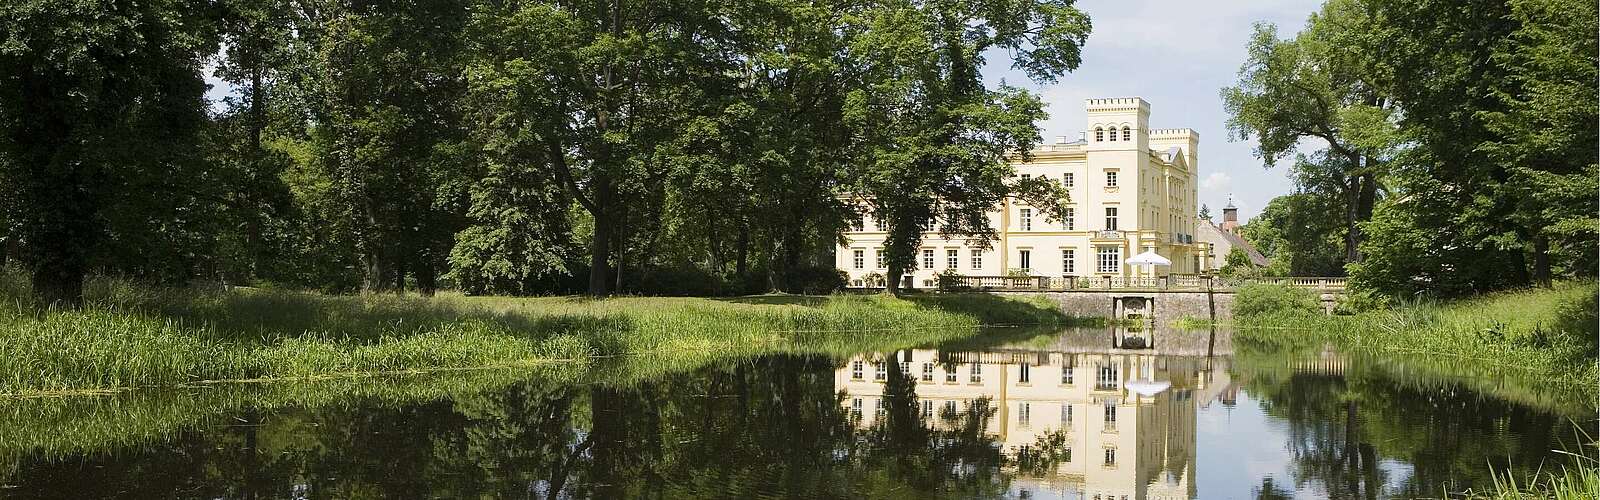 Schloss Steinhöfel mit Parkanlage,
        
    

        Foto: TMB-Fotoarchiv/Paul Hahn